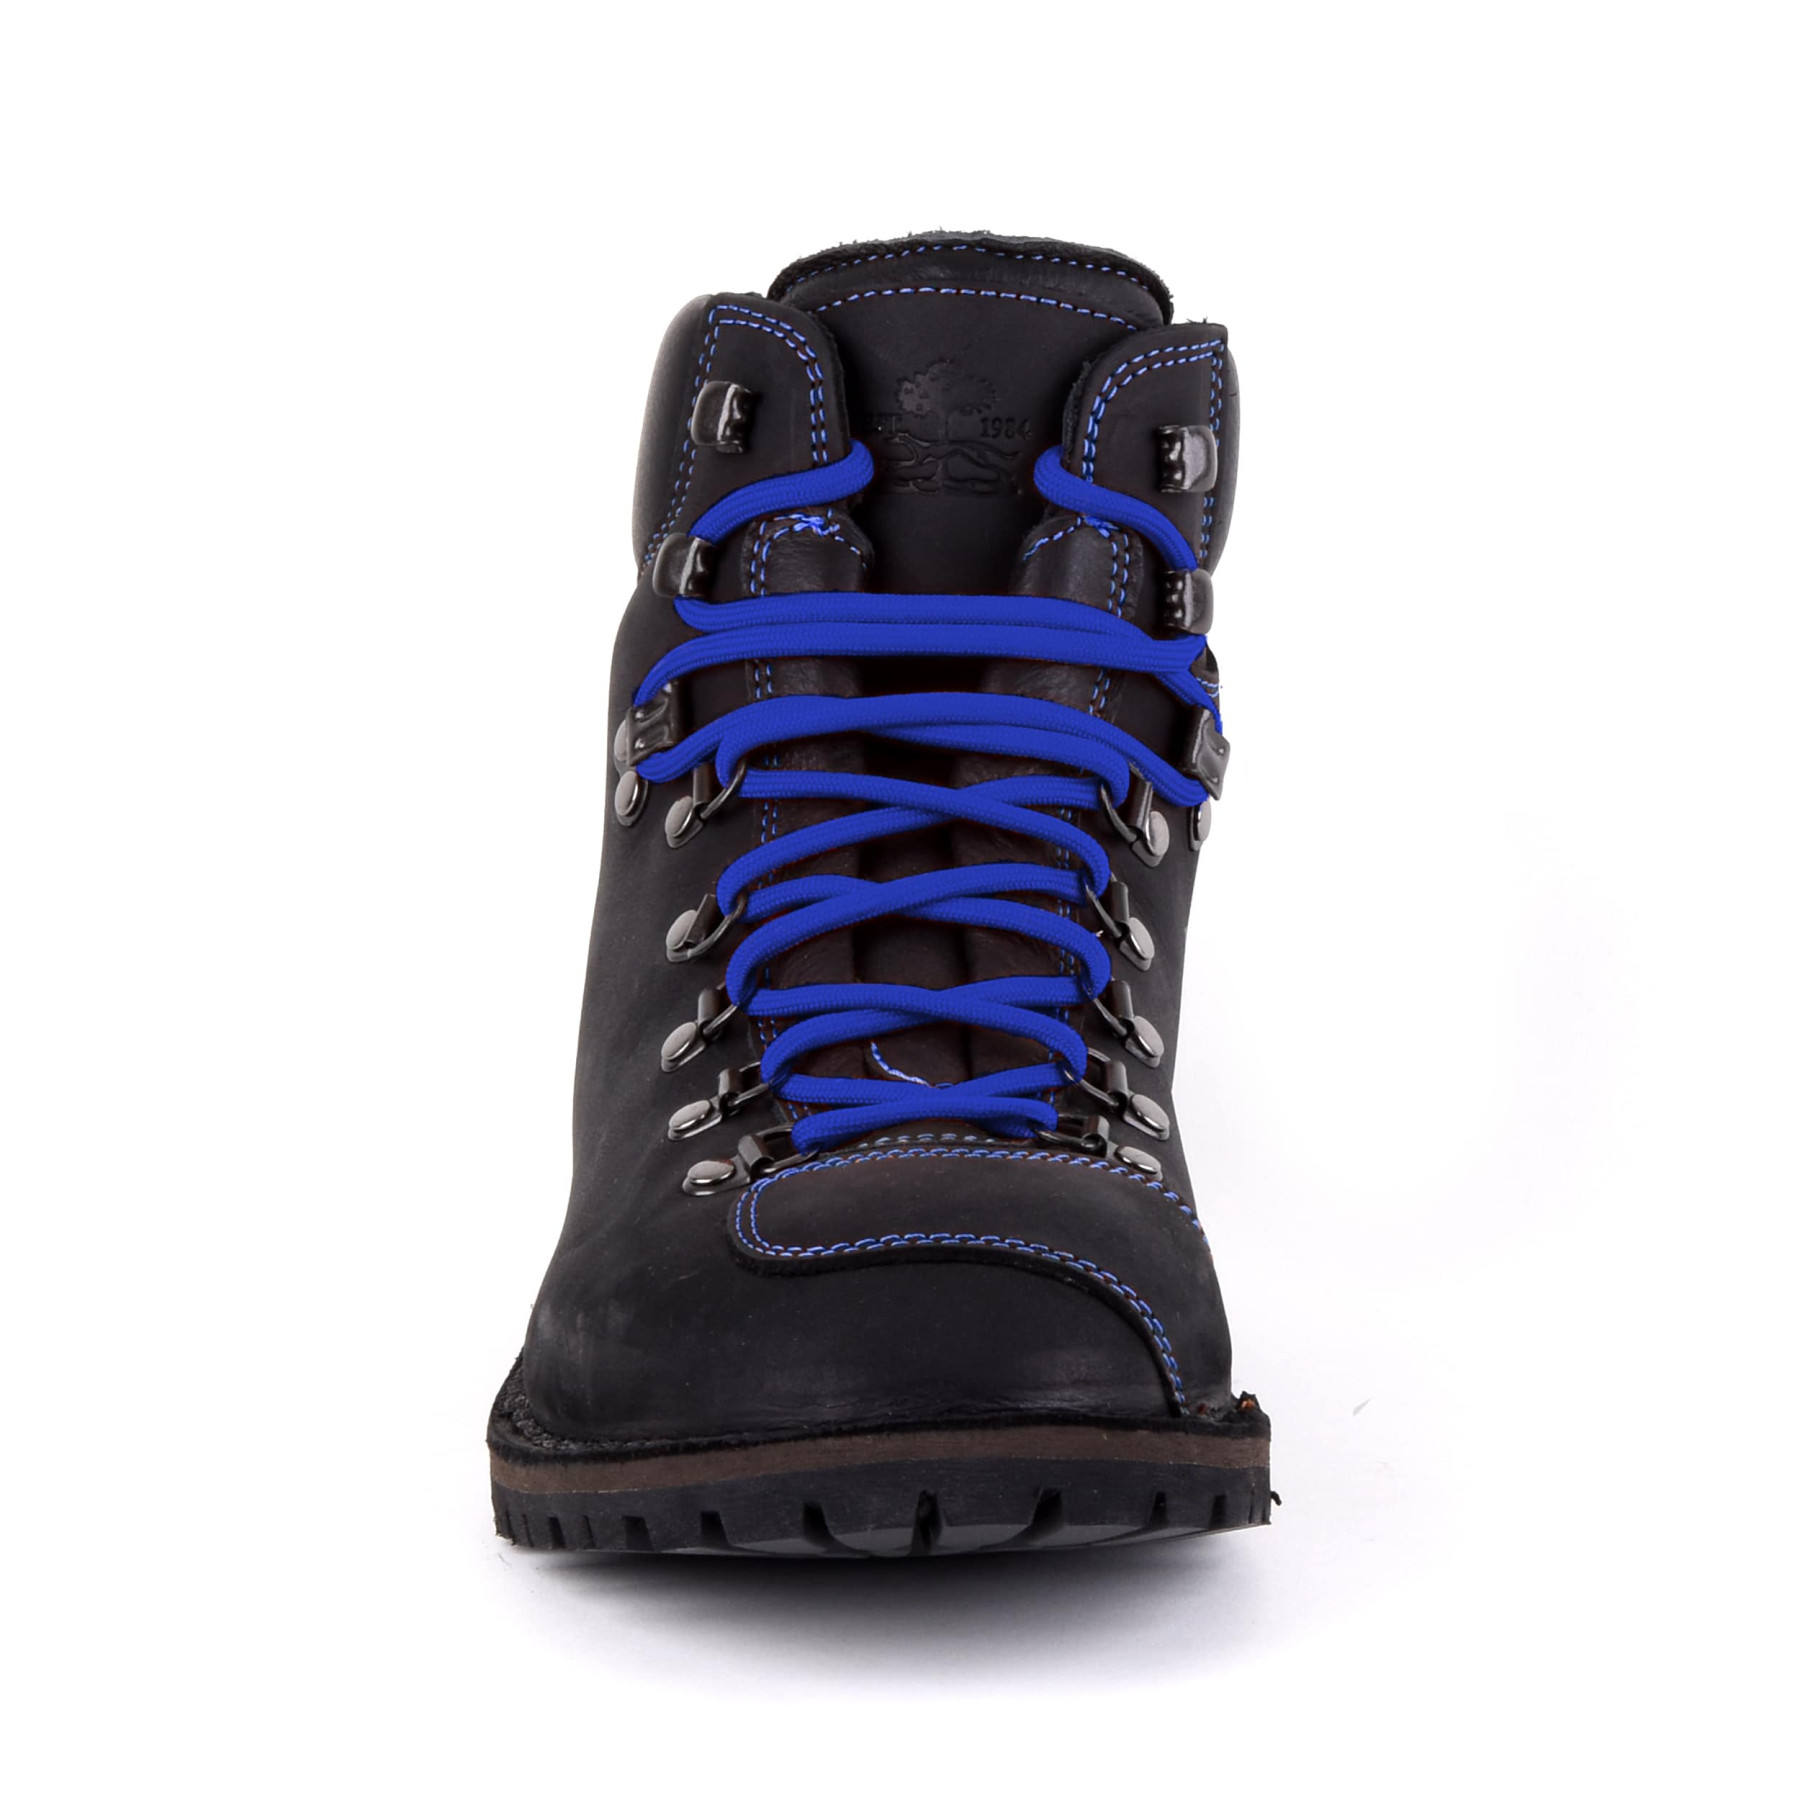 Biker Boot Adventure Denver Black, black ladies boot, blue stitching